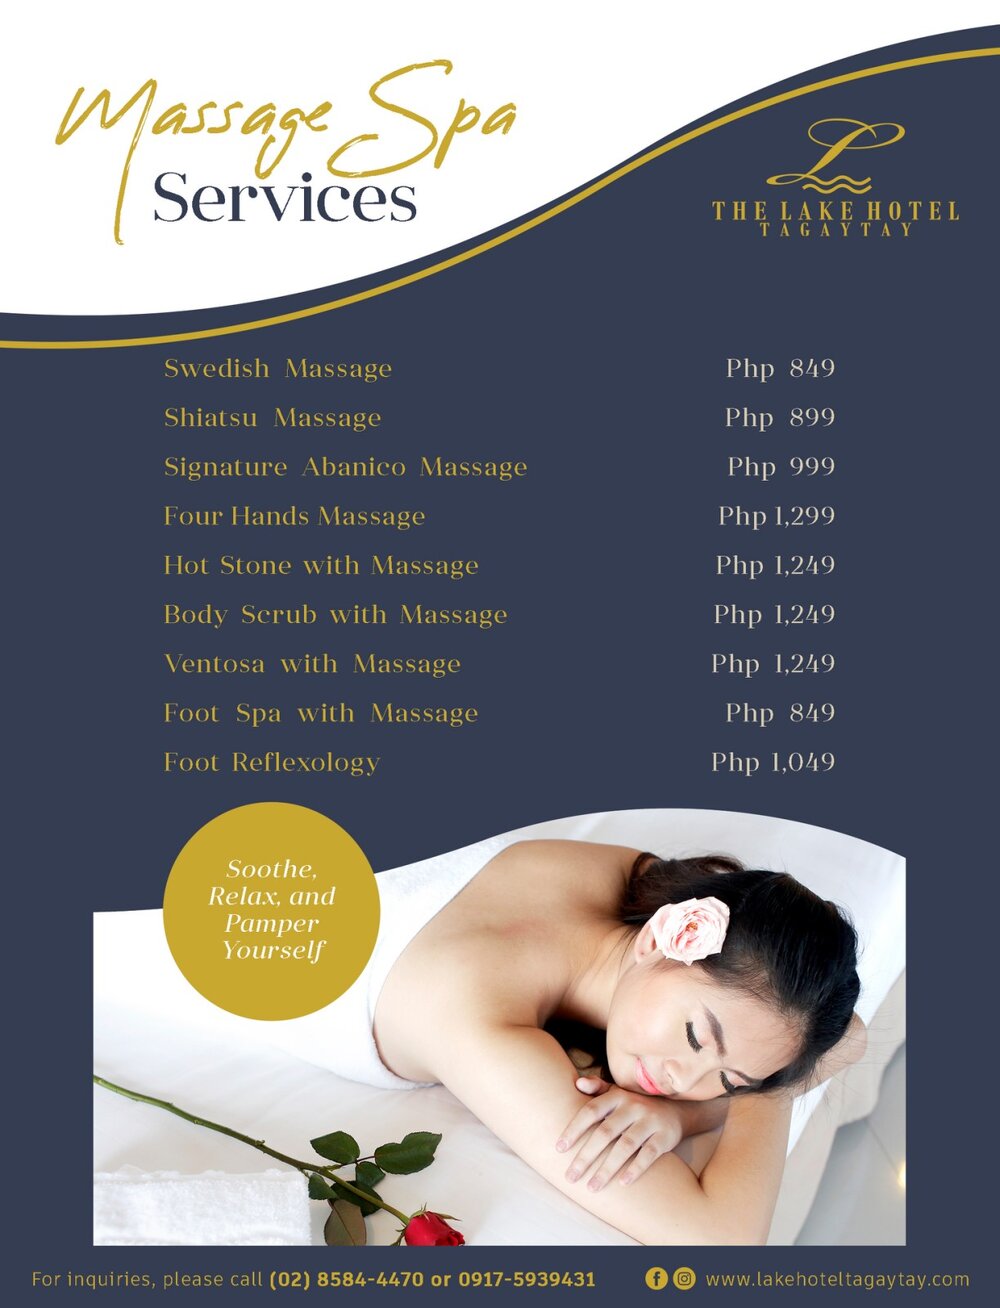 Service massage